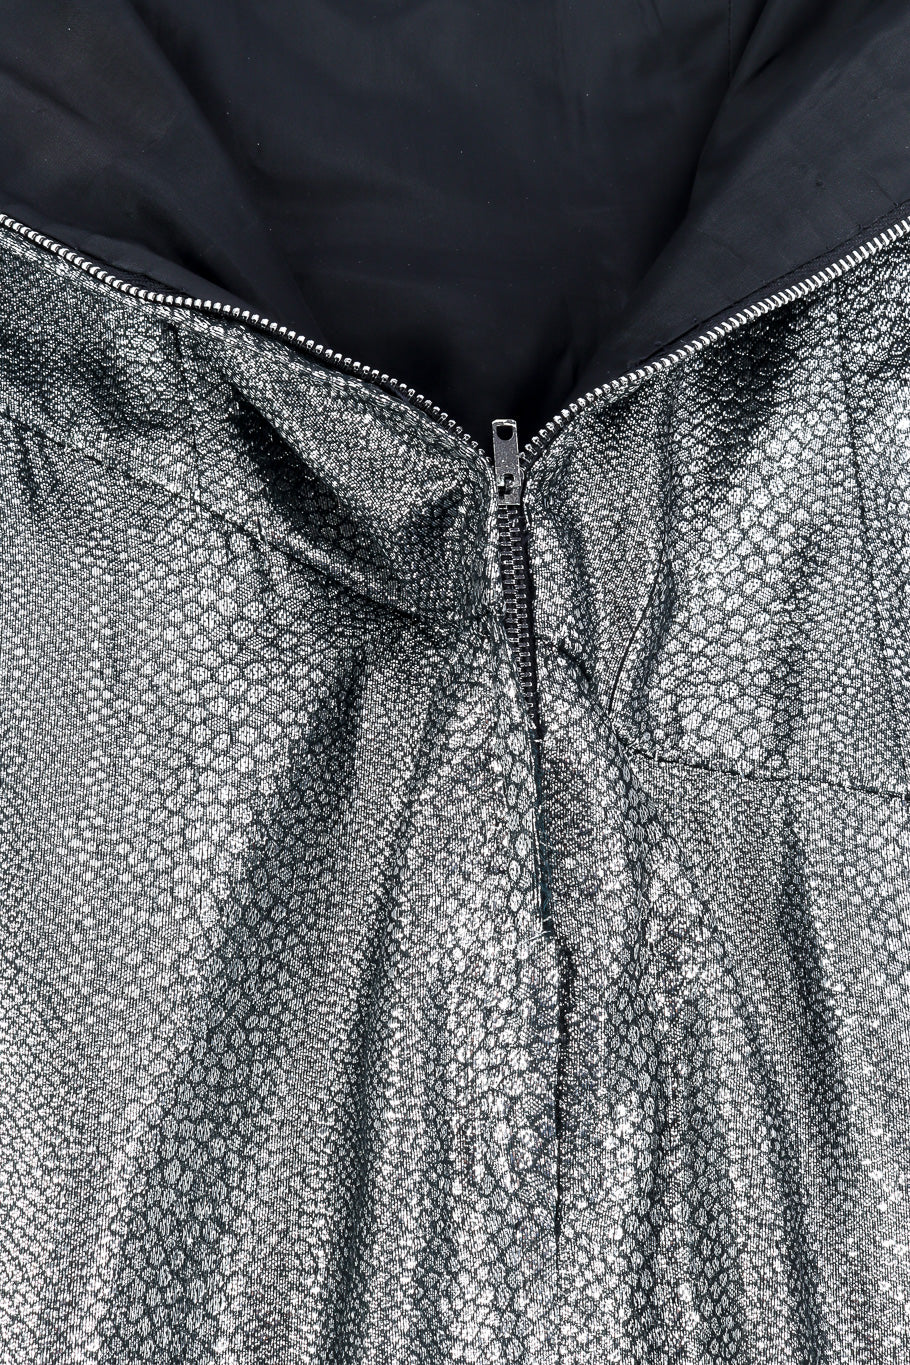 Metallic dress by Tracy Mills flat lay zipper @recessla